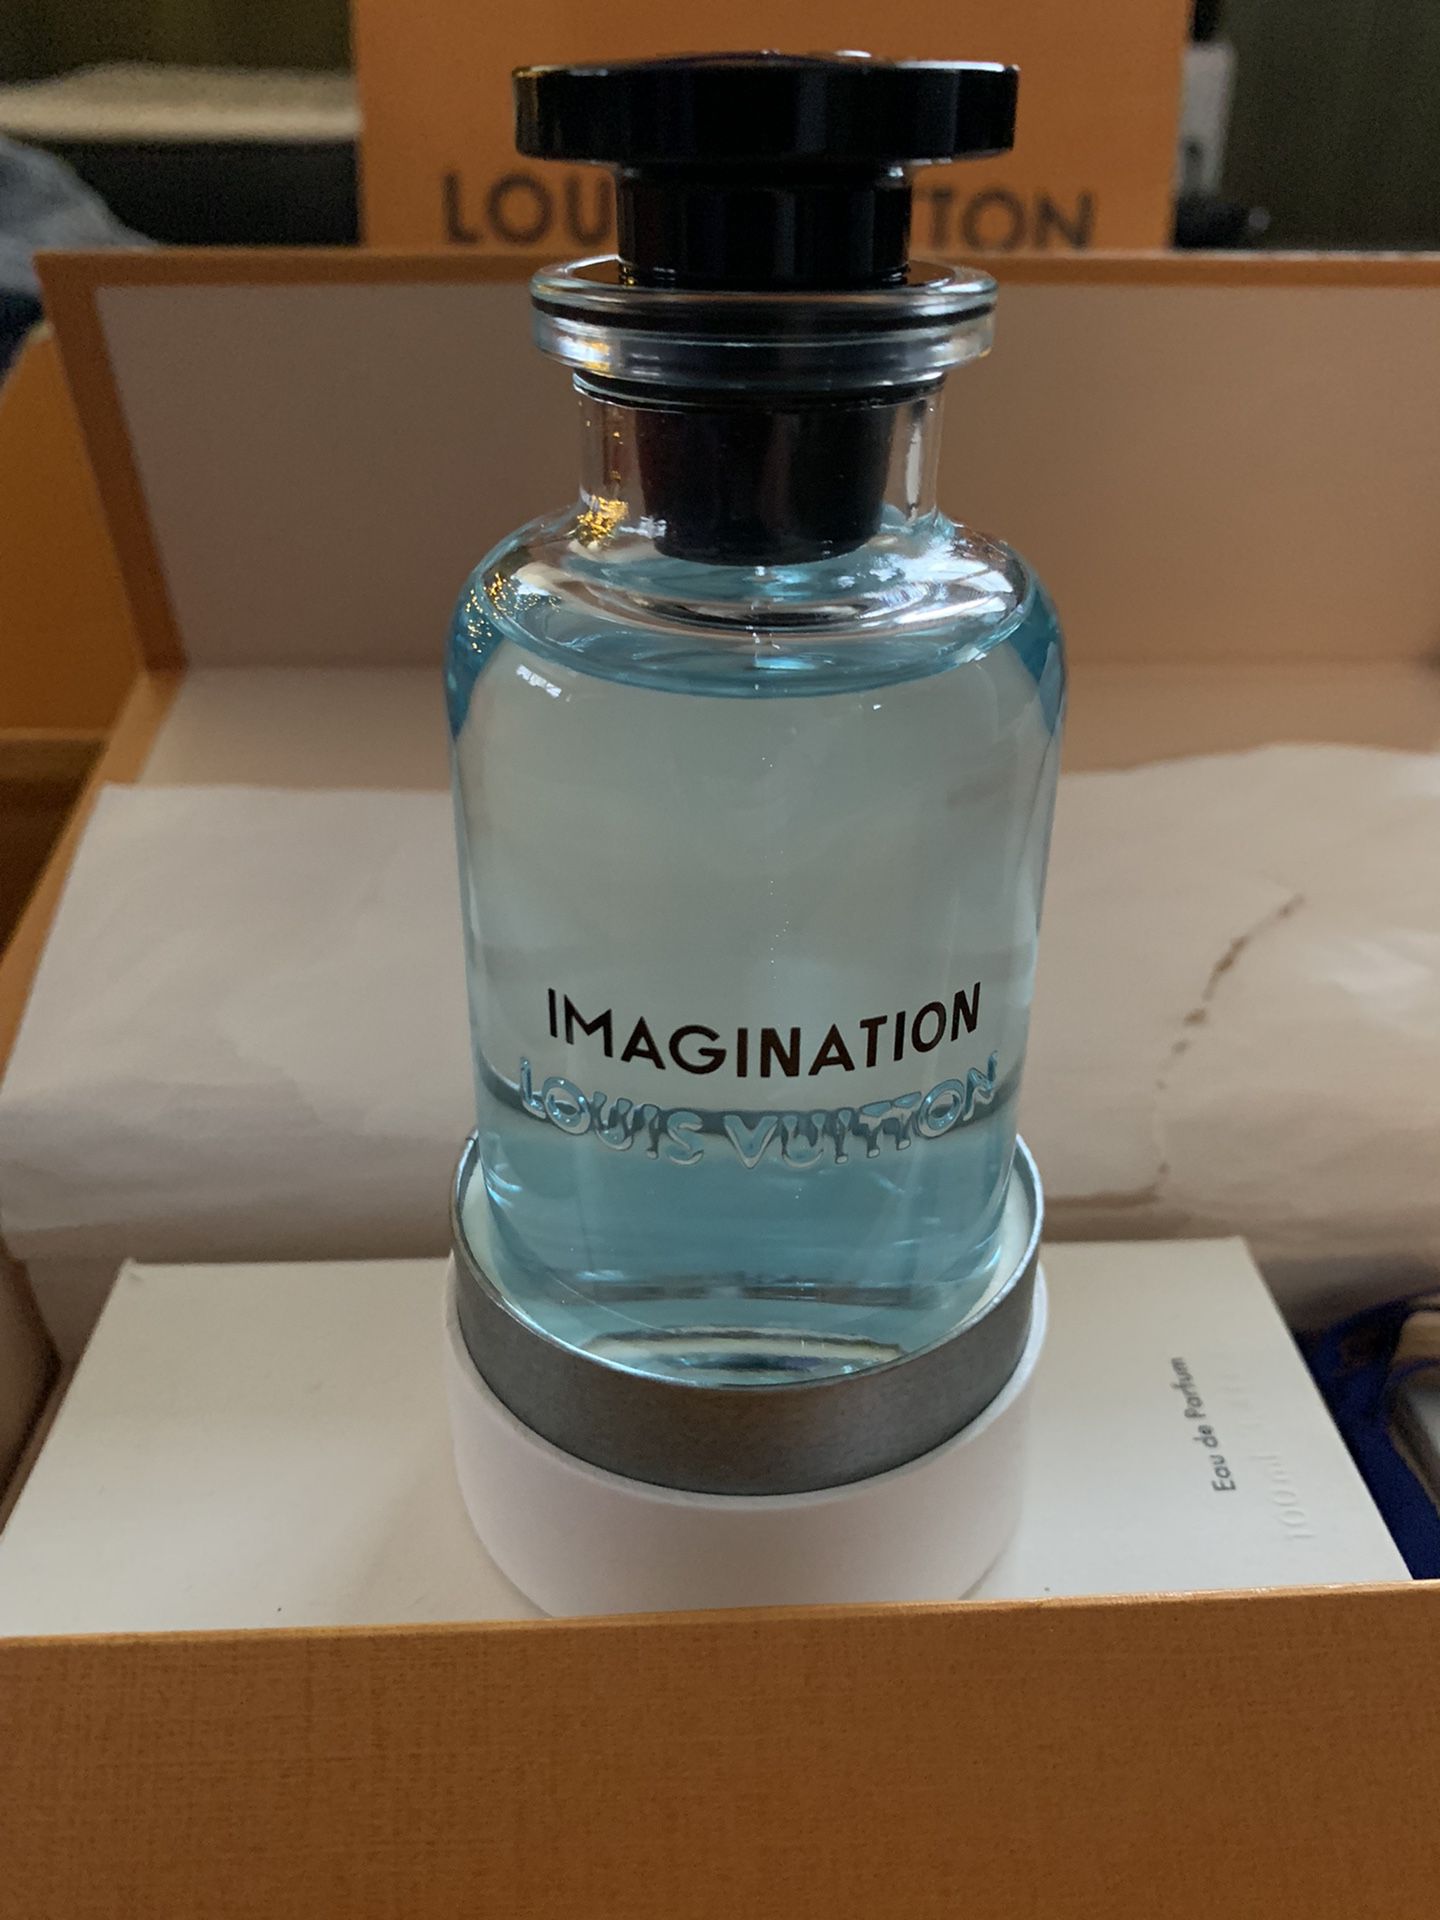 louis vuitton imagination perfume for women